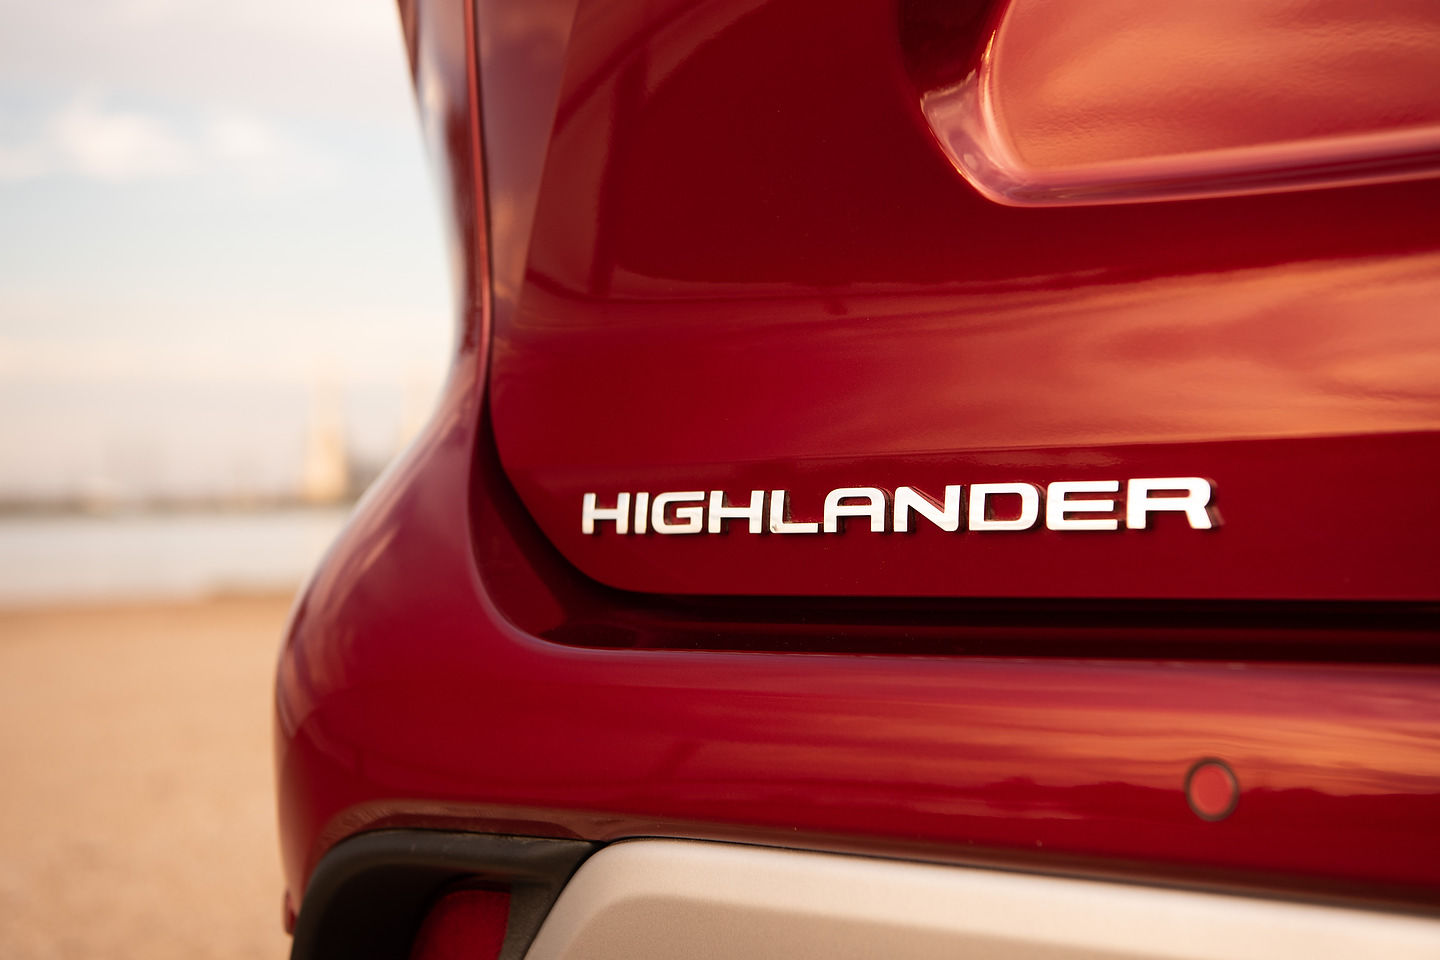 2021 Toyota Highlander vs. 2021 Honda Pilot: Choosing Toyota means getting more value